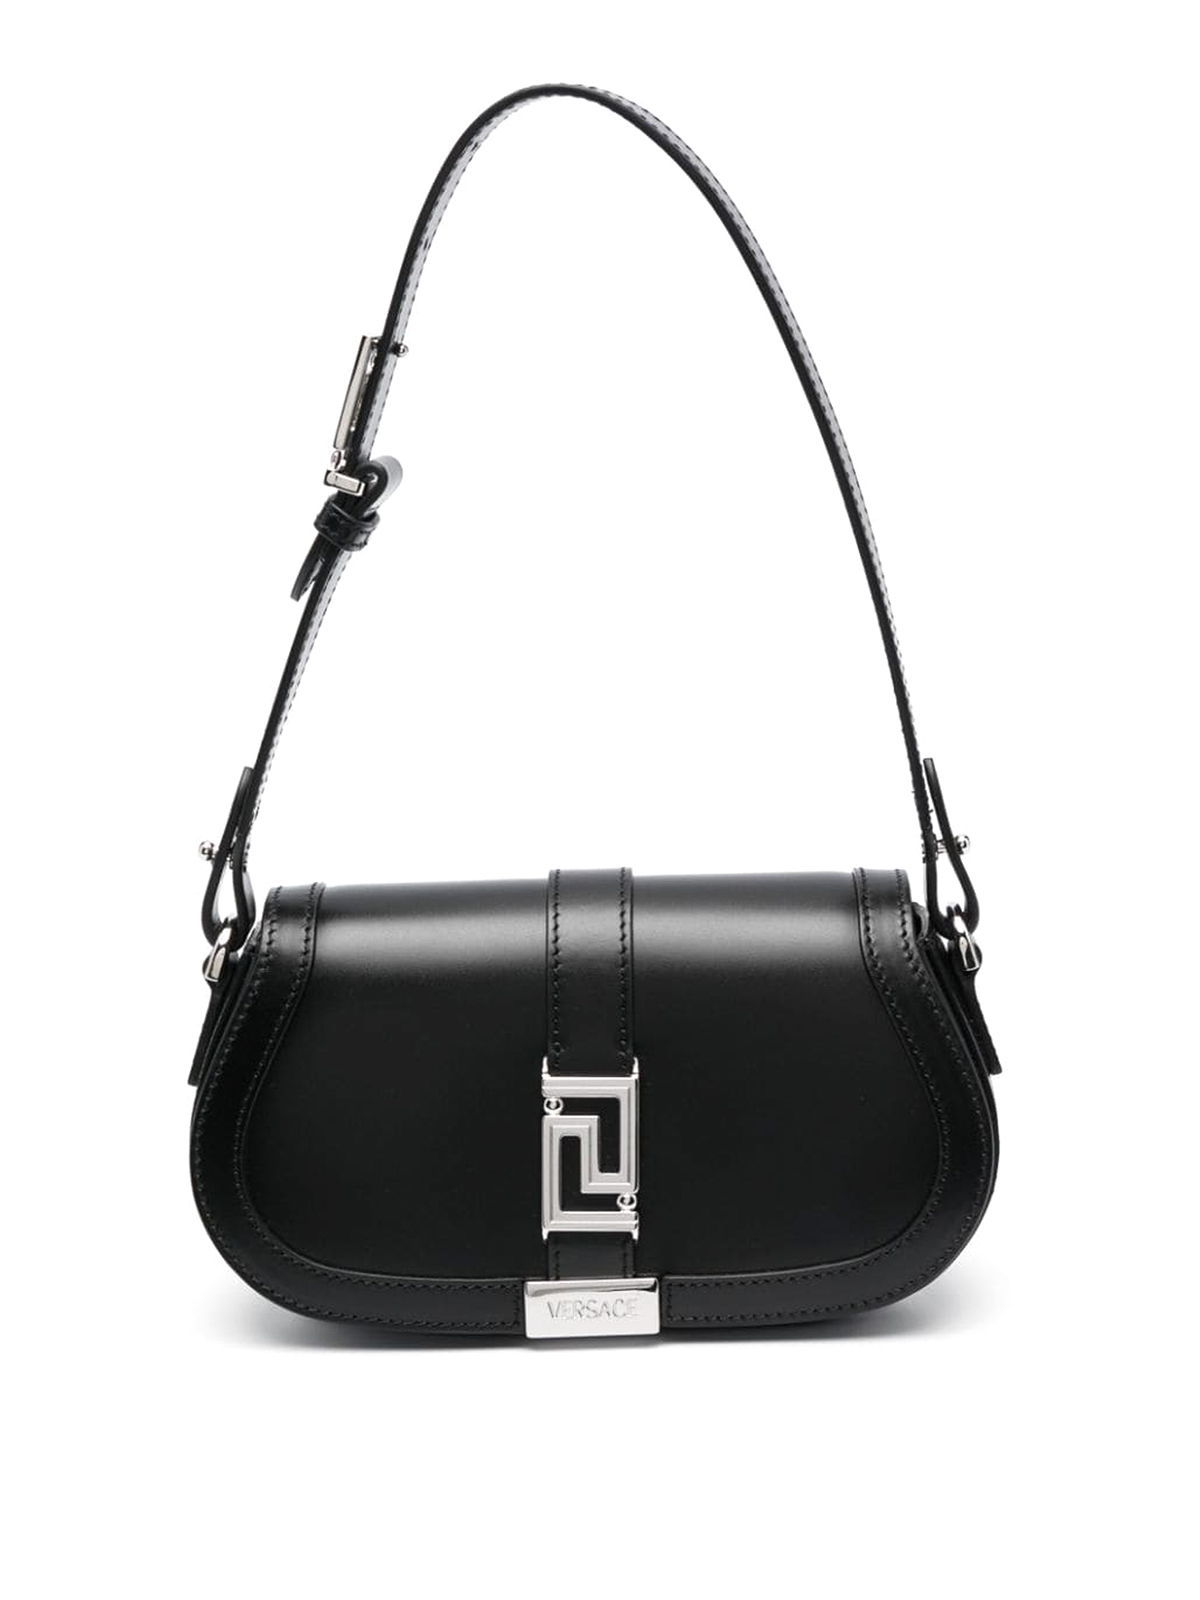 Versace Leather Bag In Black